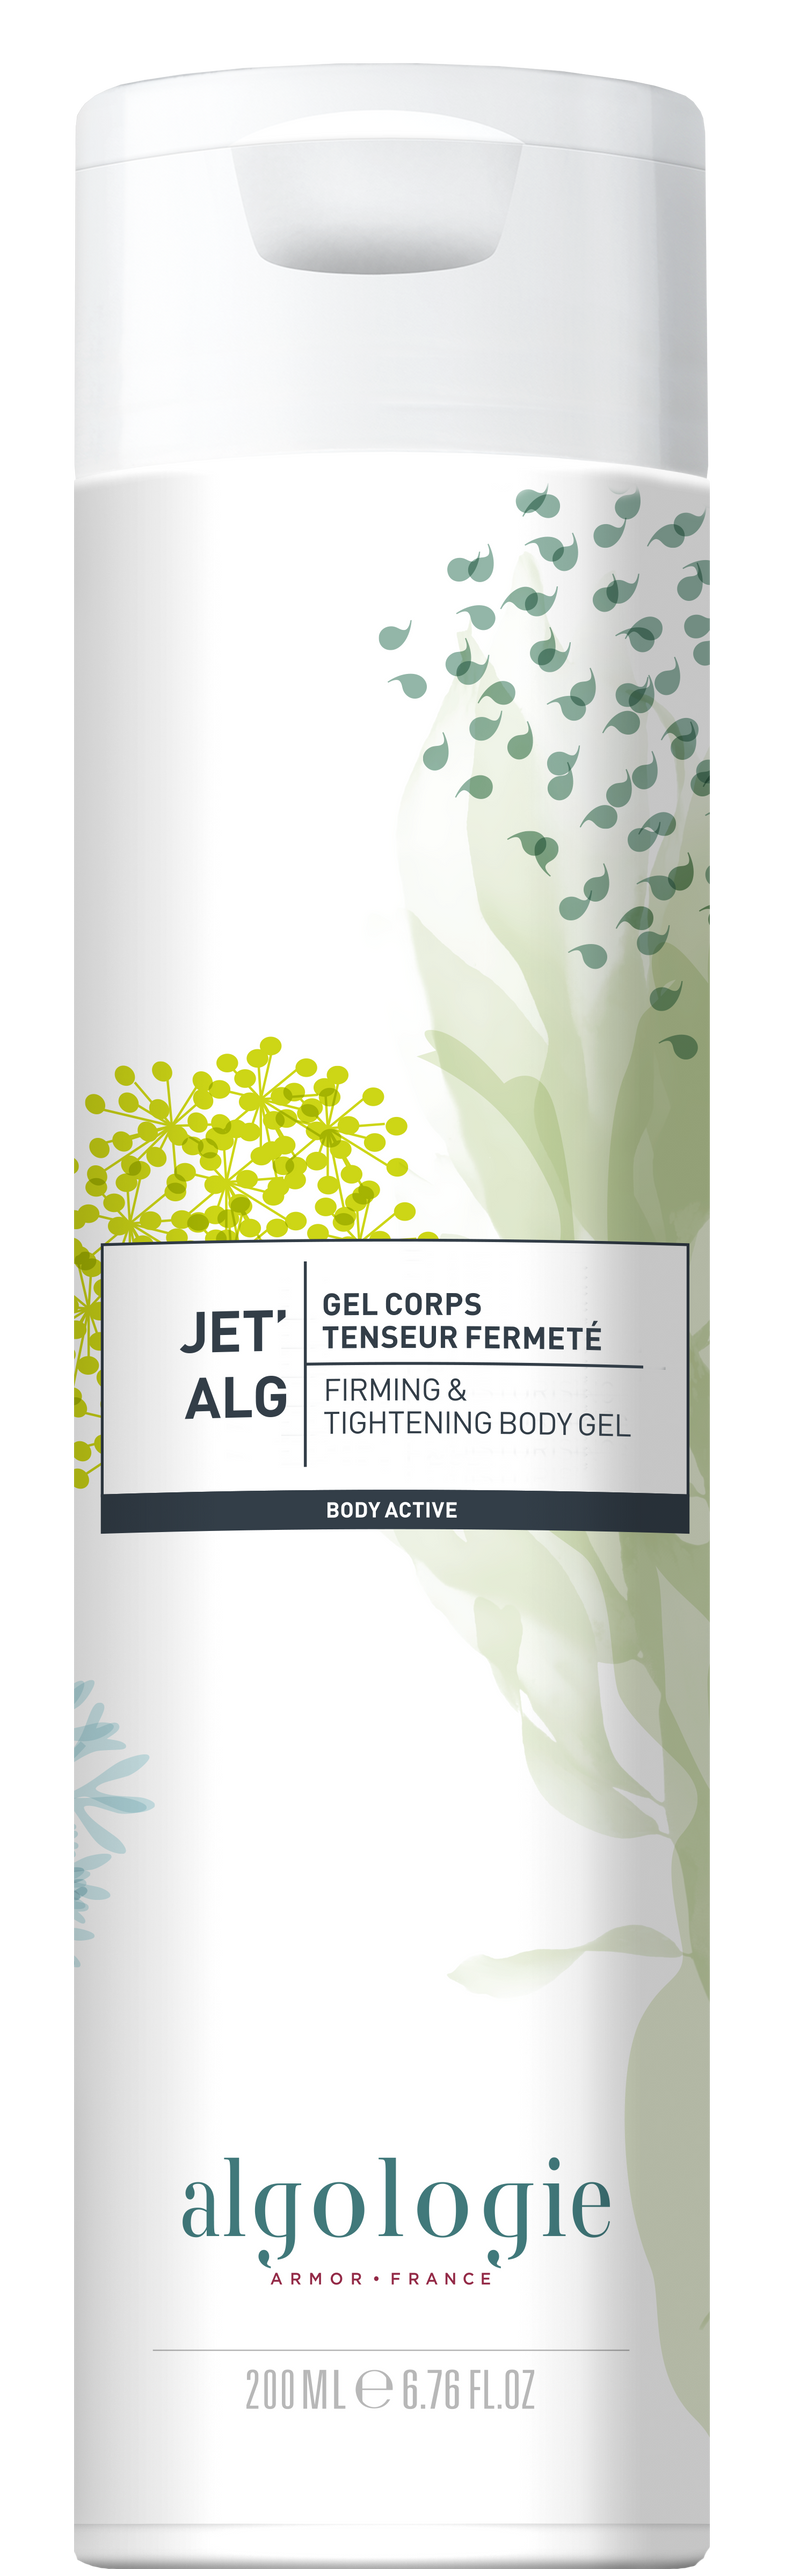 Algologie Firming and Tightening Body Gel 200ml